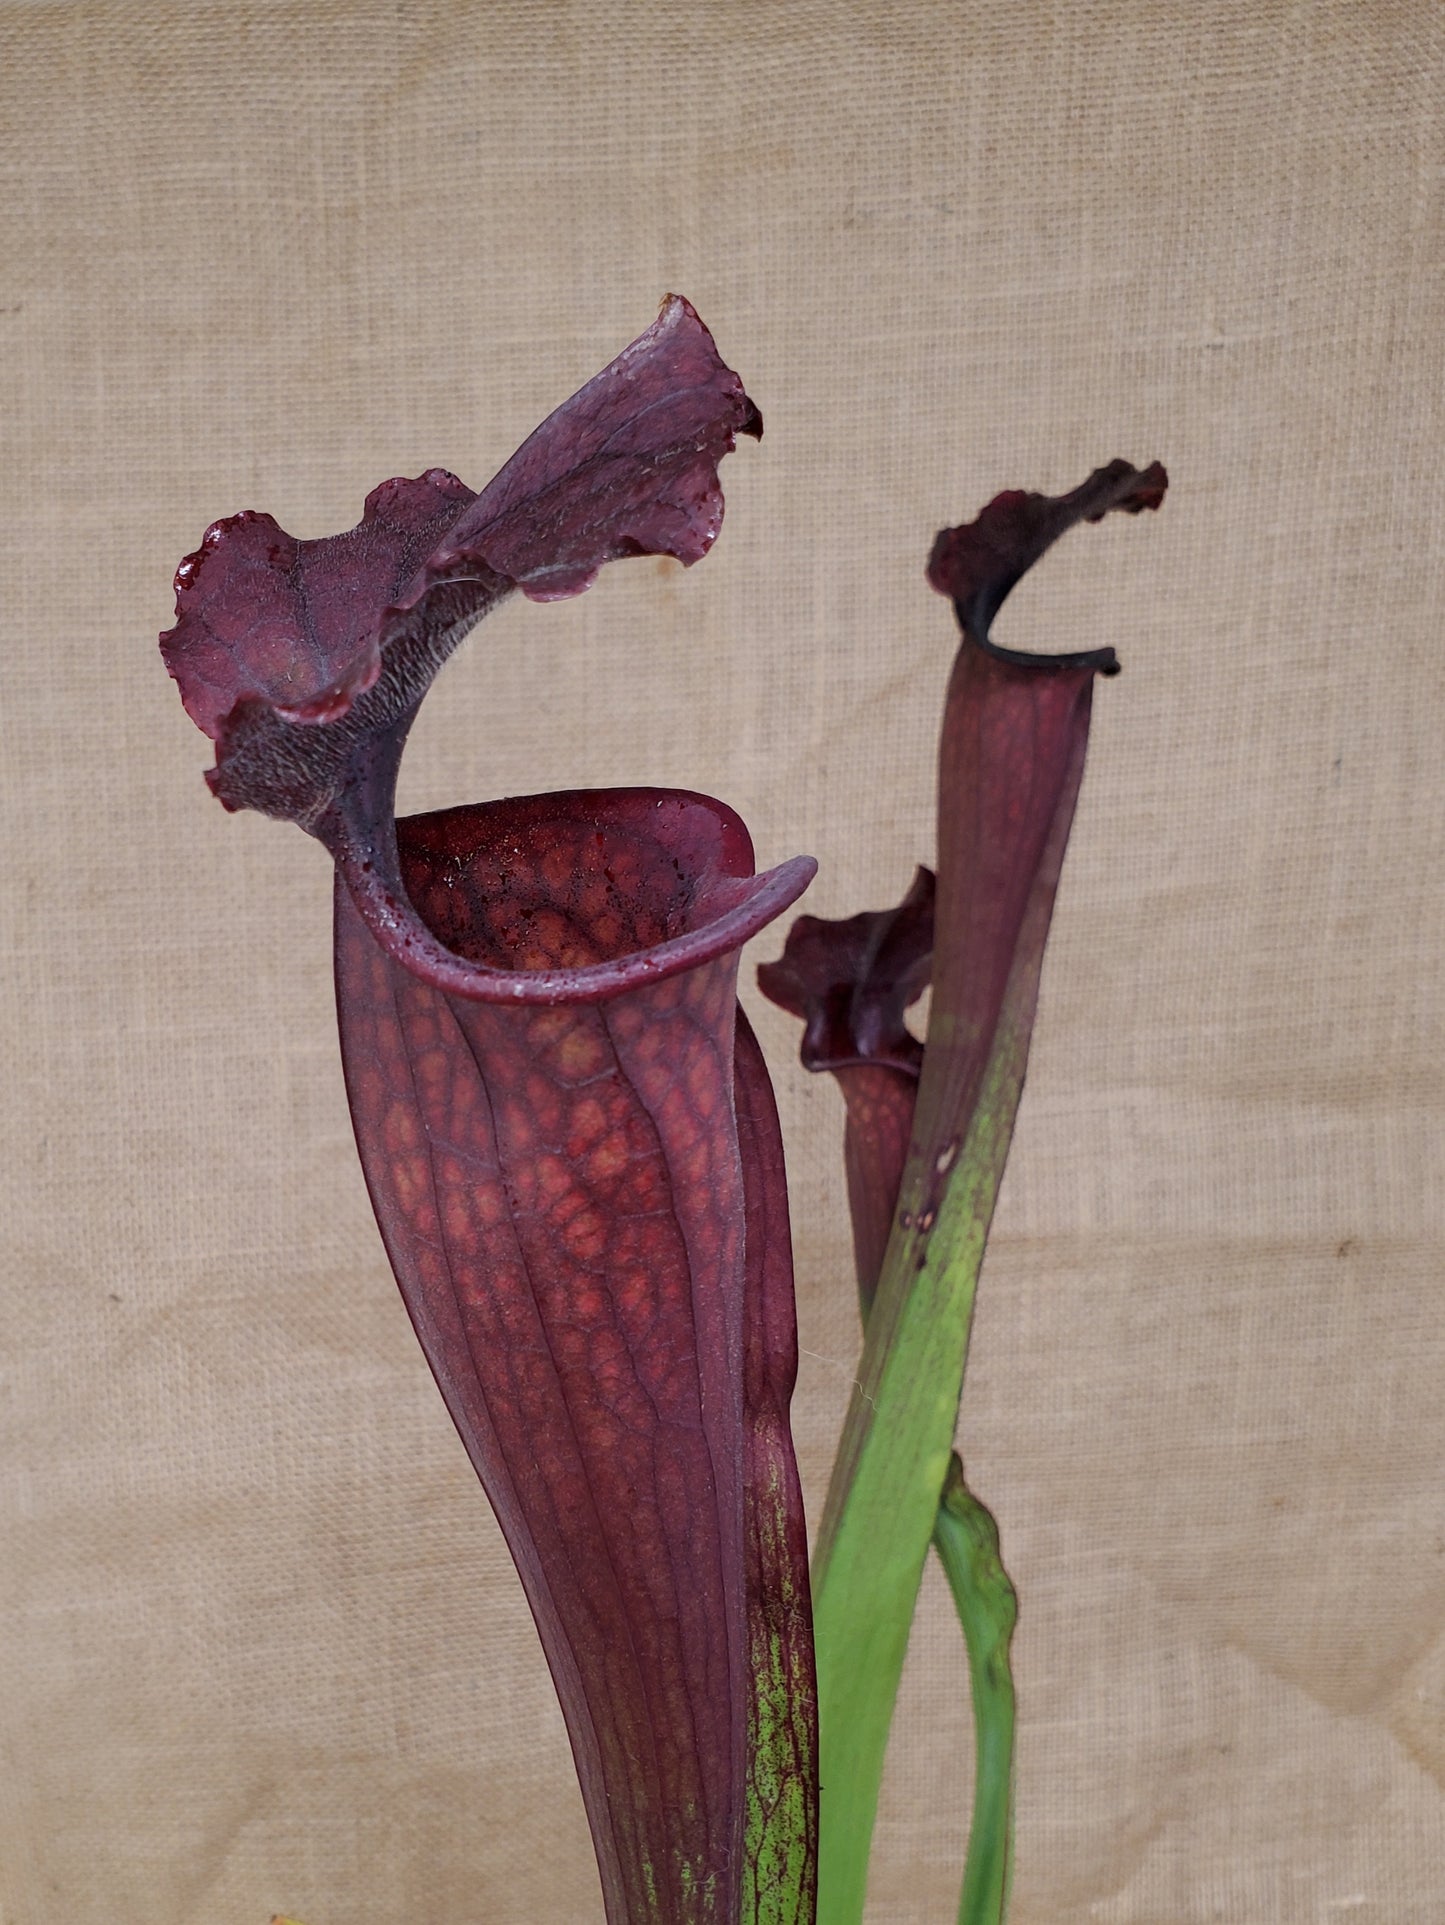 Pitcher Plant - Sarracenia Bloodmoon Carnivorous plant